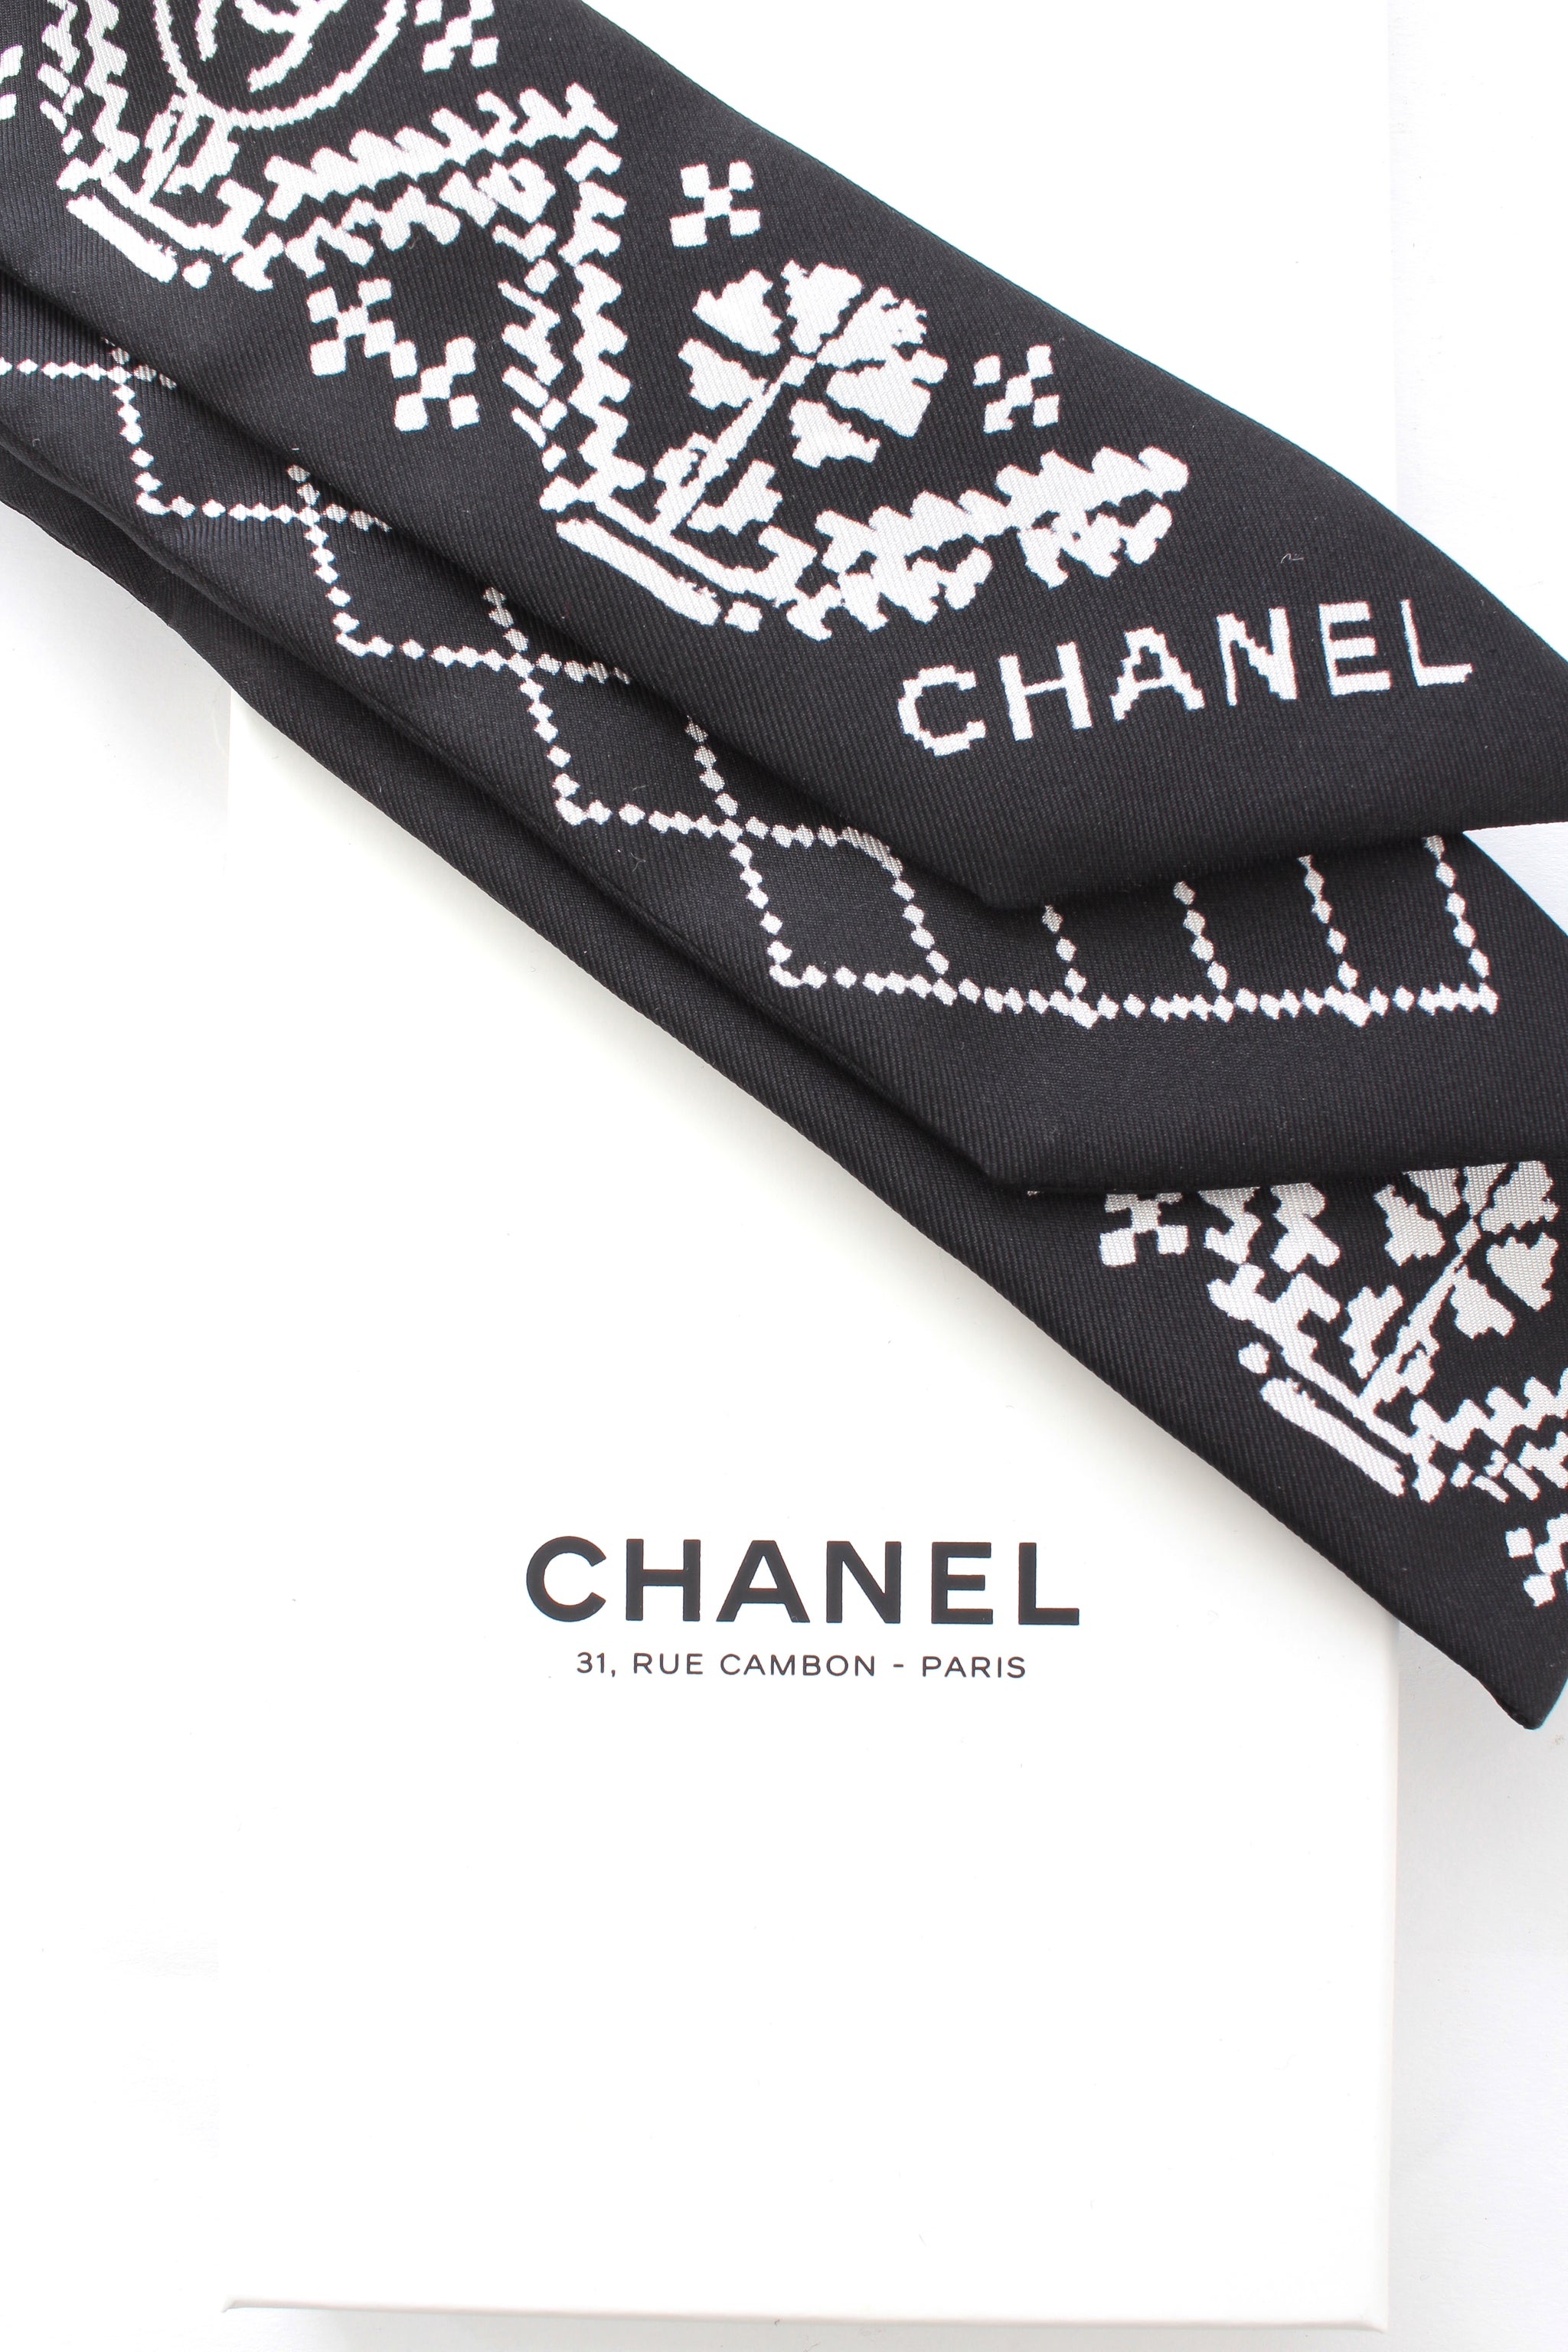 Chanel Black & White Cashmere Scarf